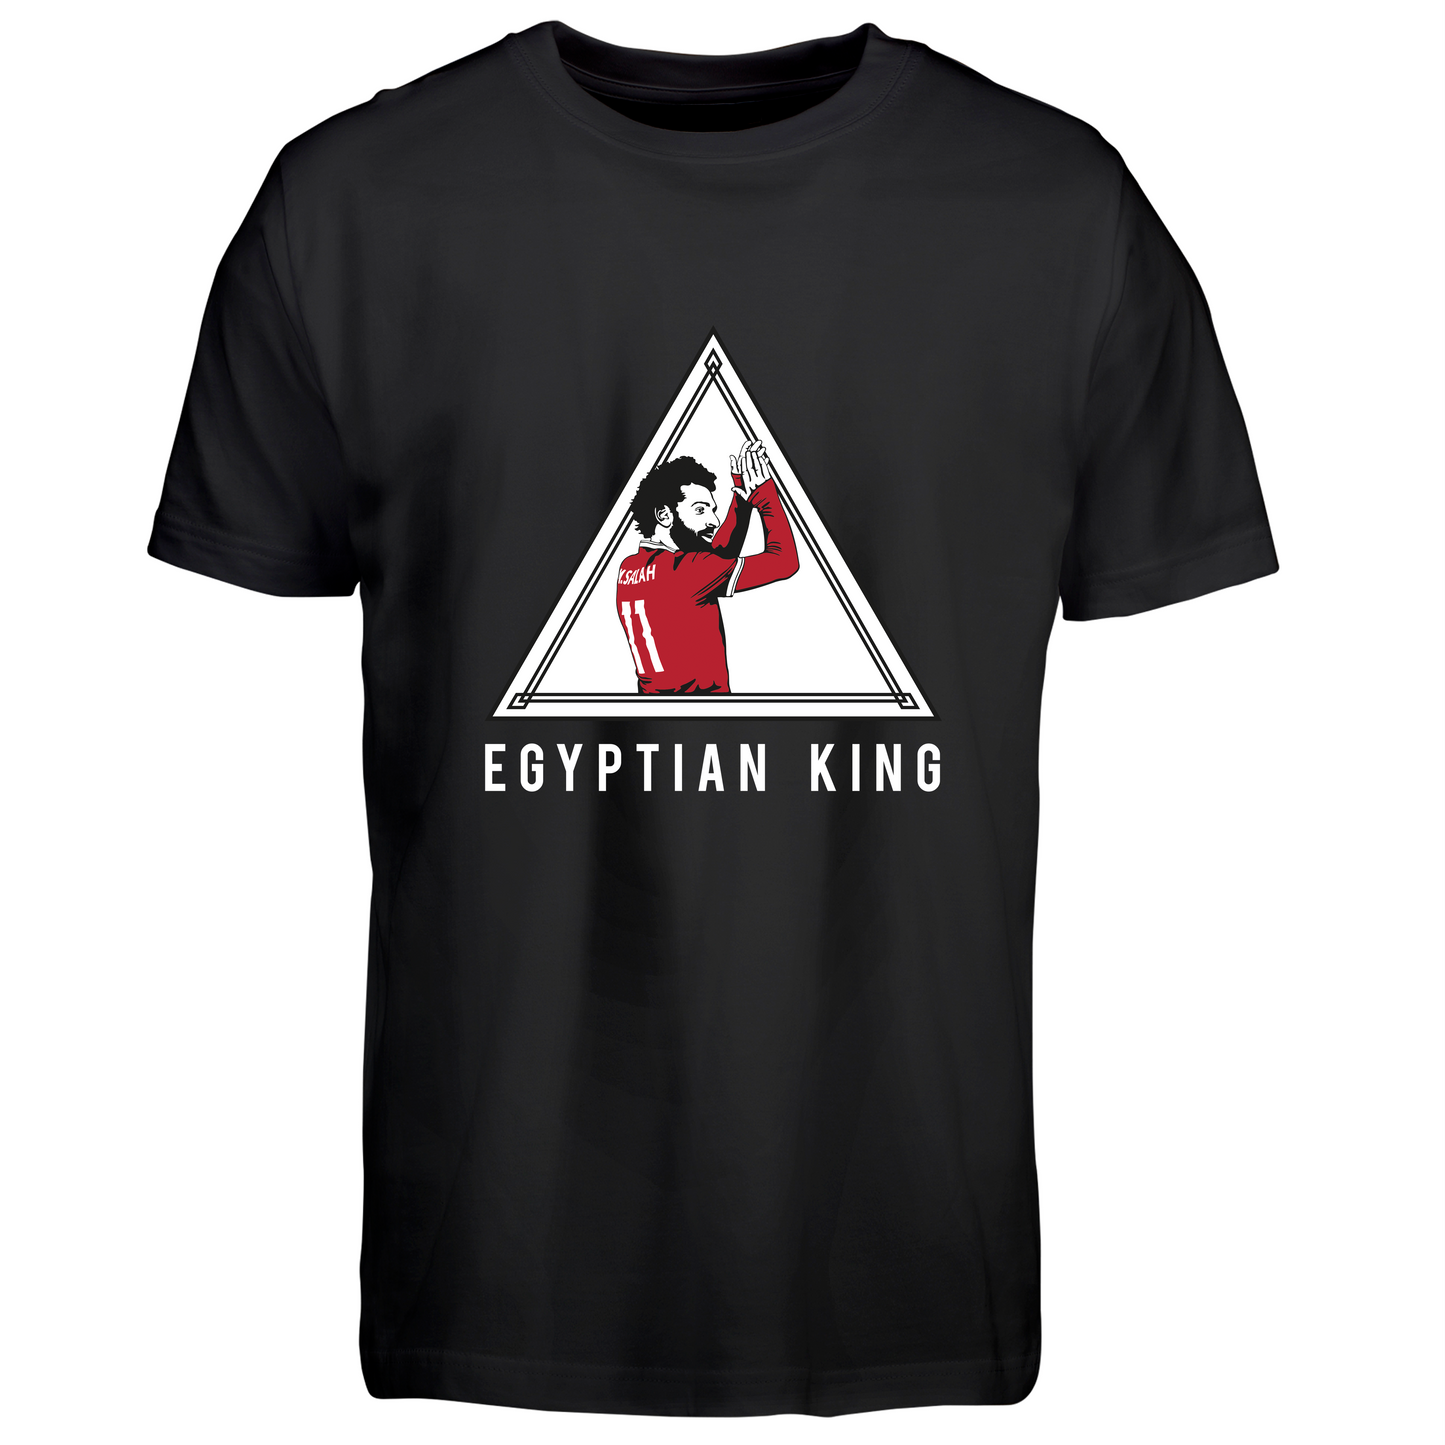 Egyptian King - Børn